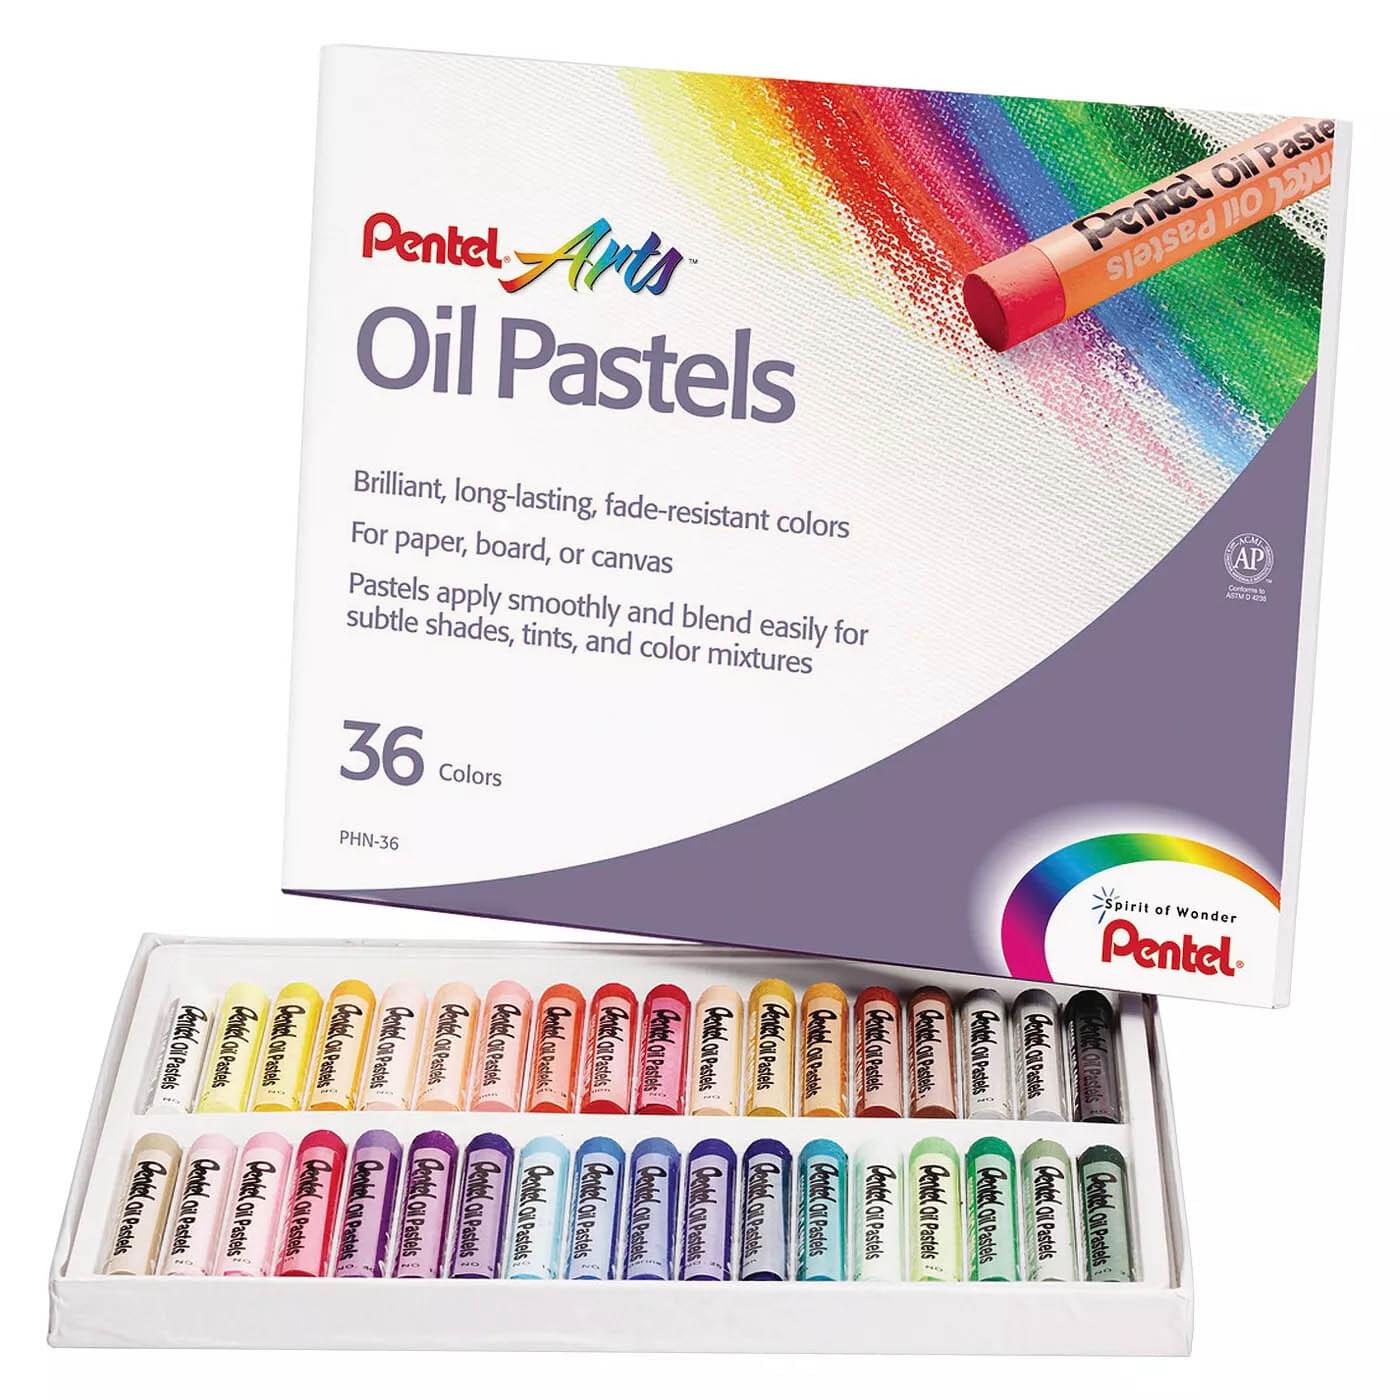 Pentel Arts Oil Pastels Craft Crayon Drawing 49 Colours Set of 50